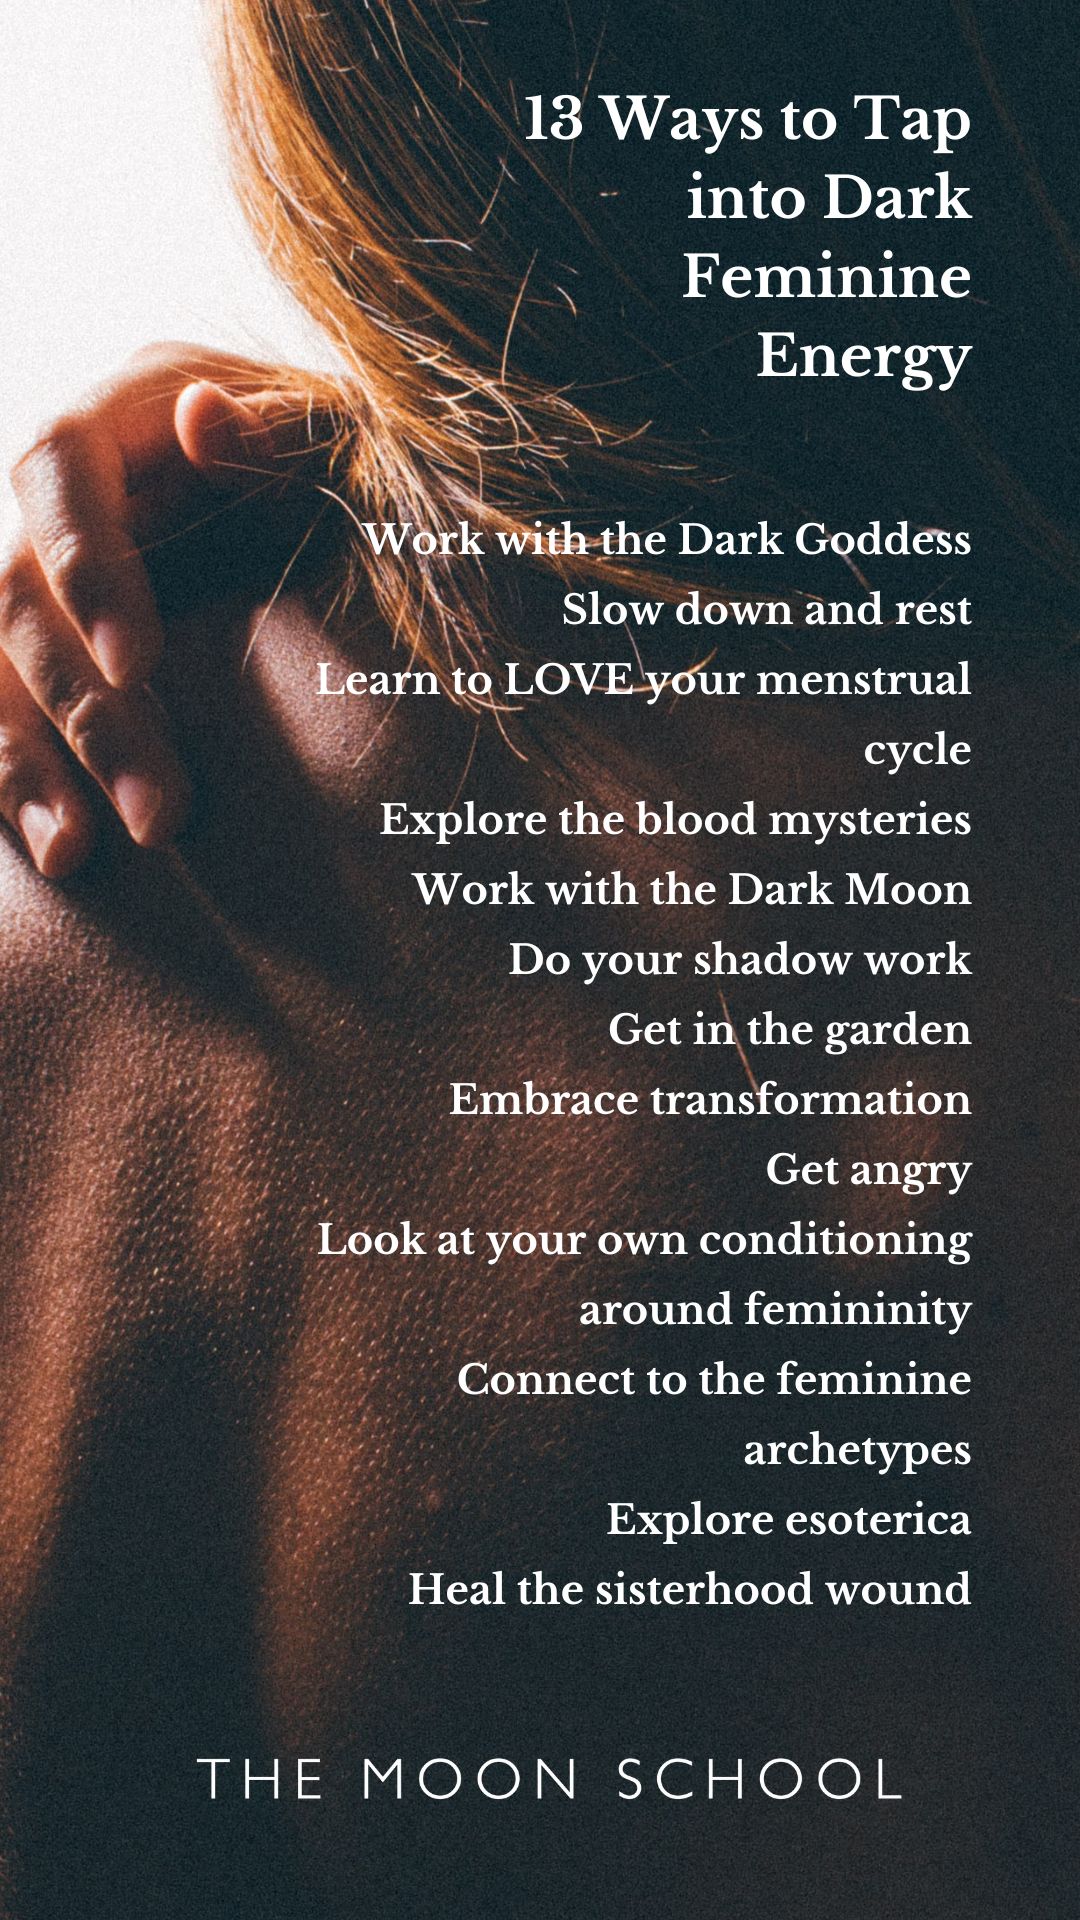 Pinterest pin with list of tips to awaken dark feminine traits